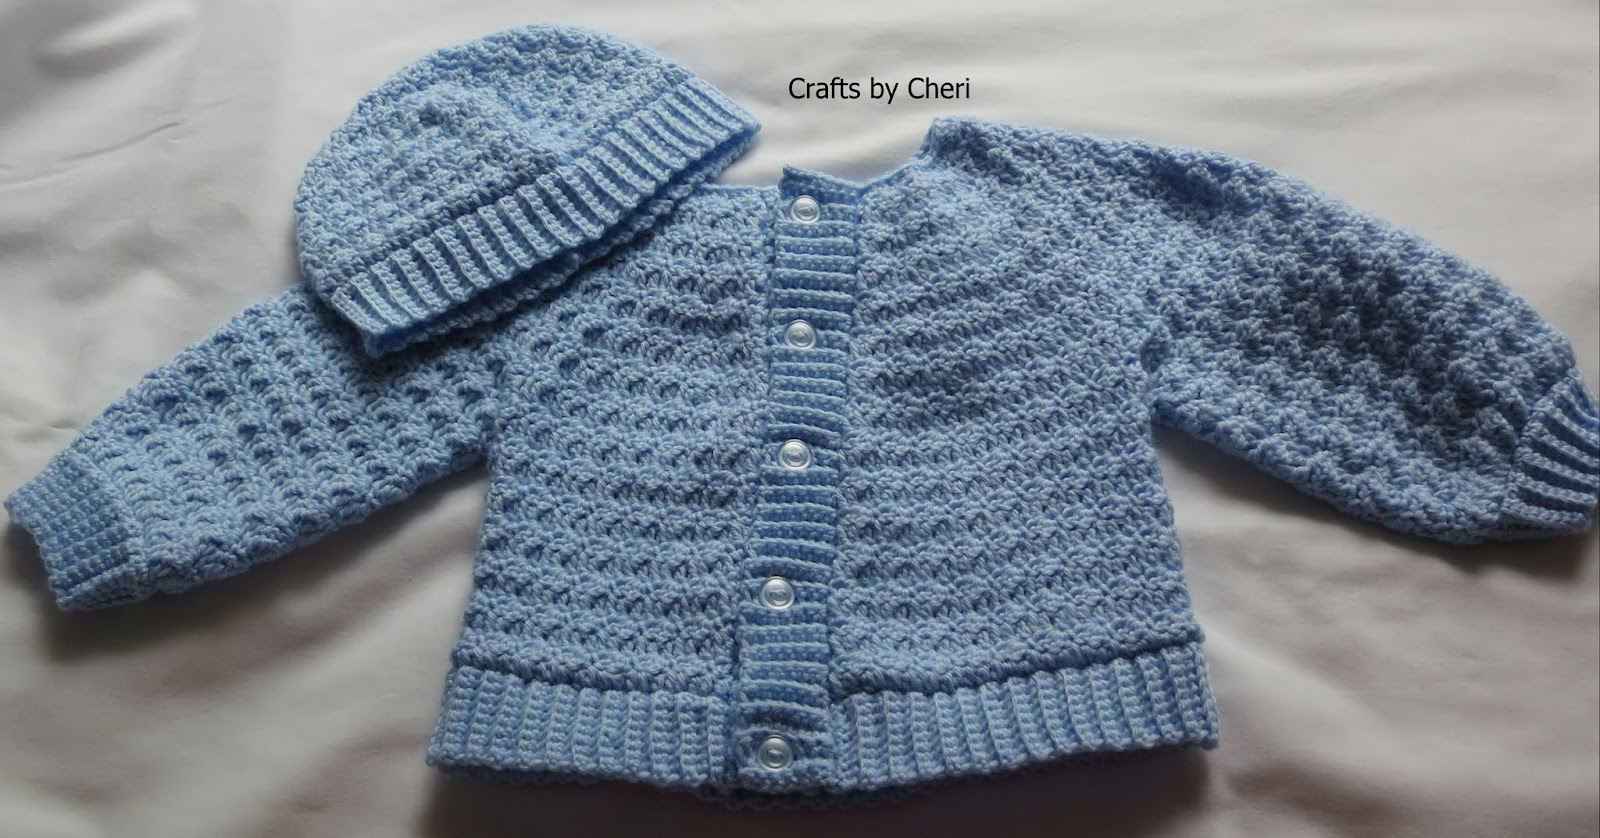 Crochet Baby Sweater Patterns Cheris Crochet Ba Or Reborn Ba Doll Clothing Or Craftscheri